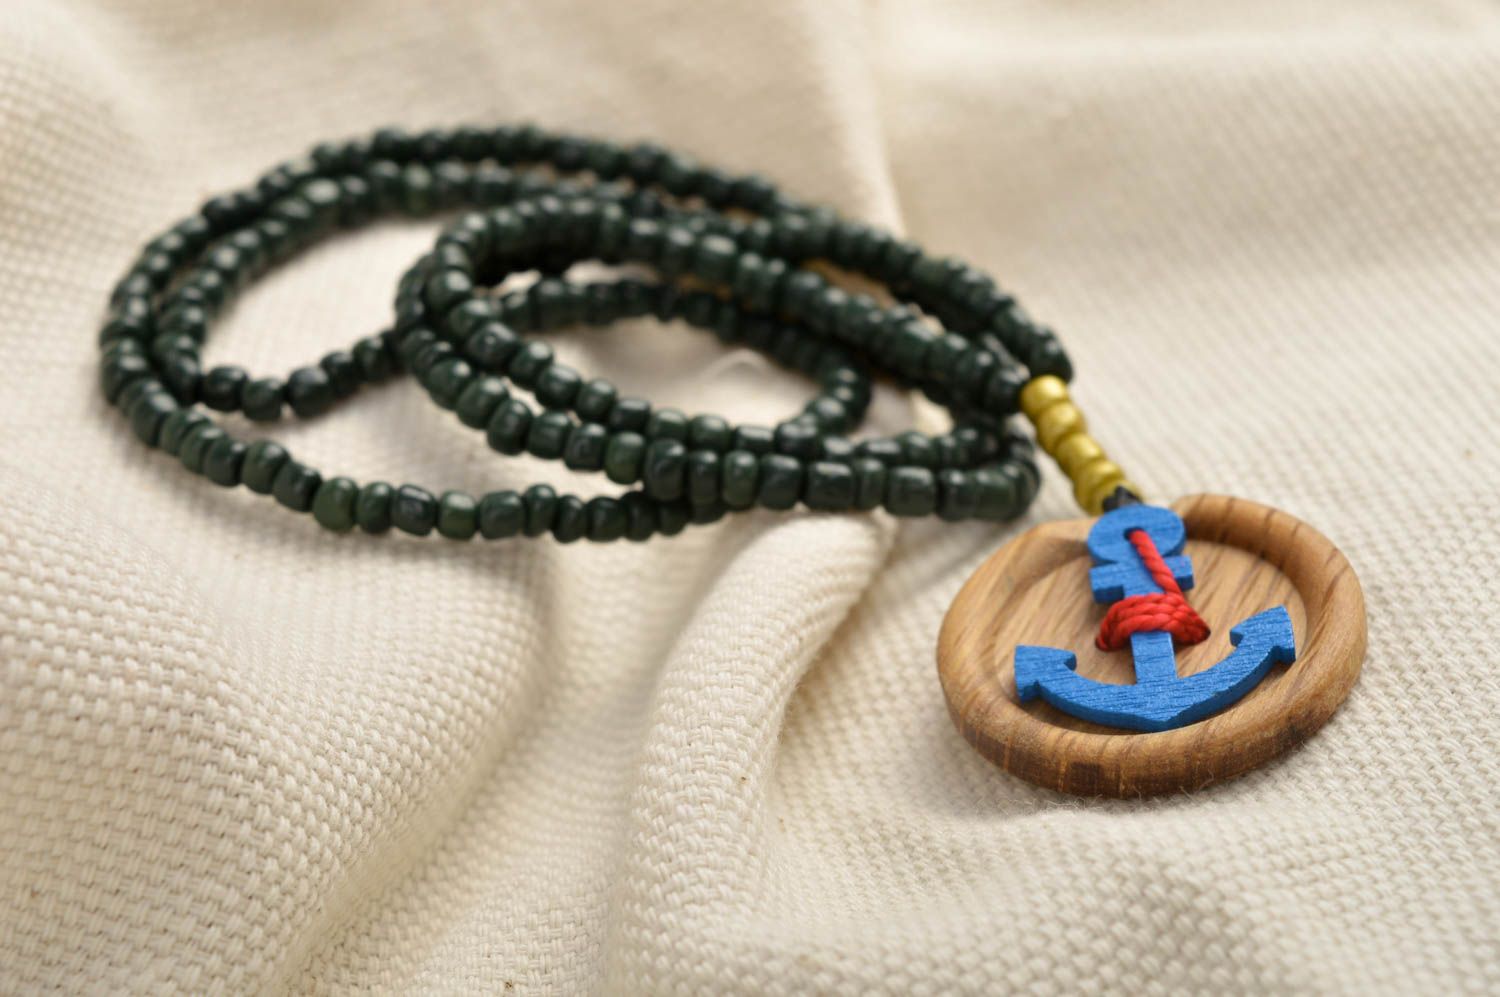 Handmade elegant wooden pendant stylish beaded pendant cute accessory gift photo 1